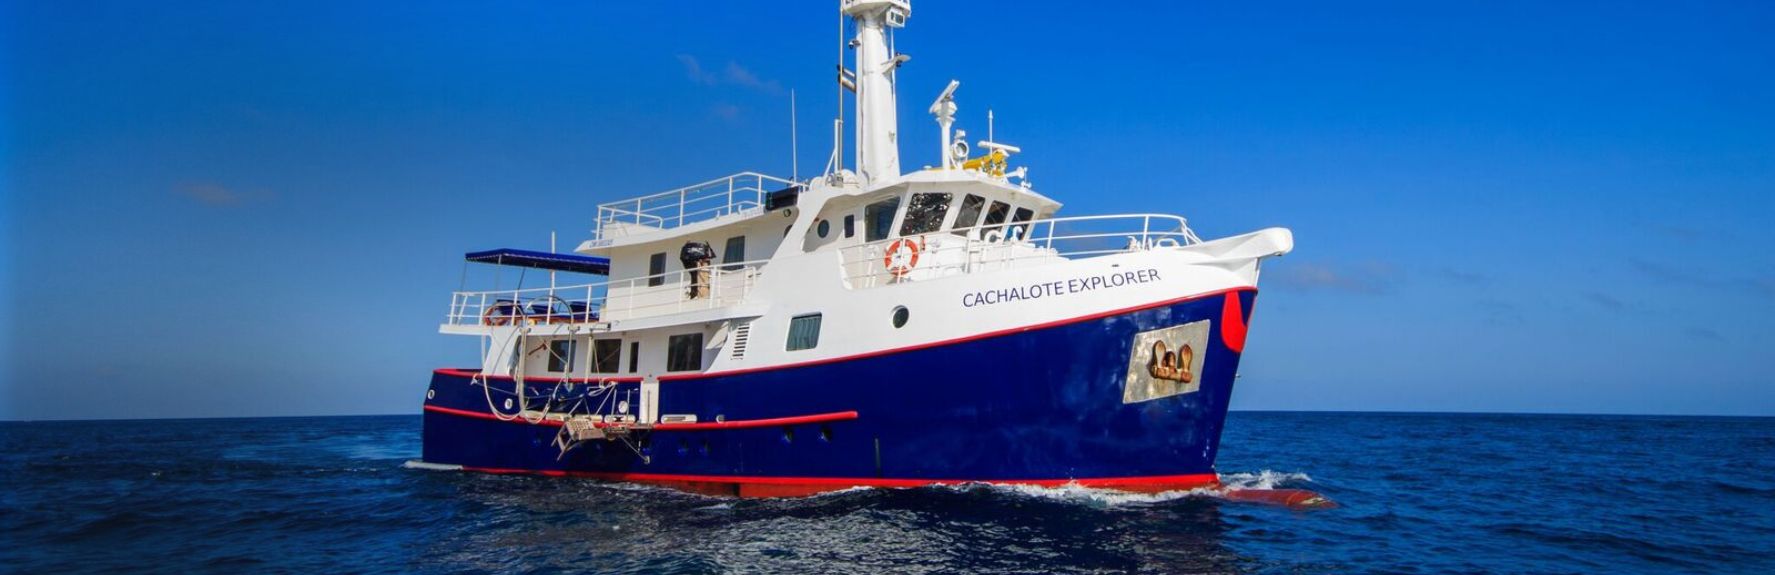 Cachalote Explorer Galapagos Cruise (1)